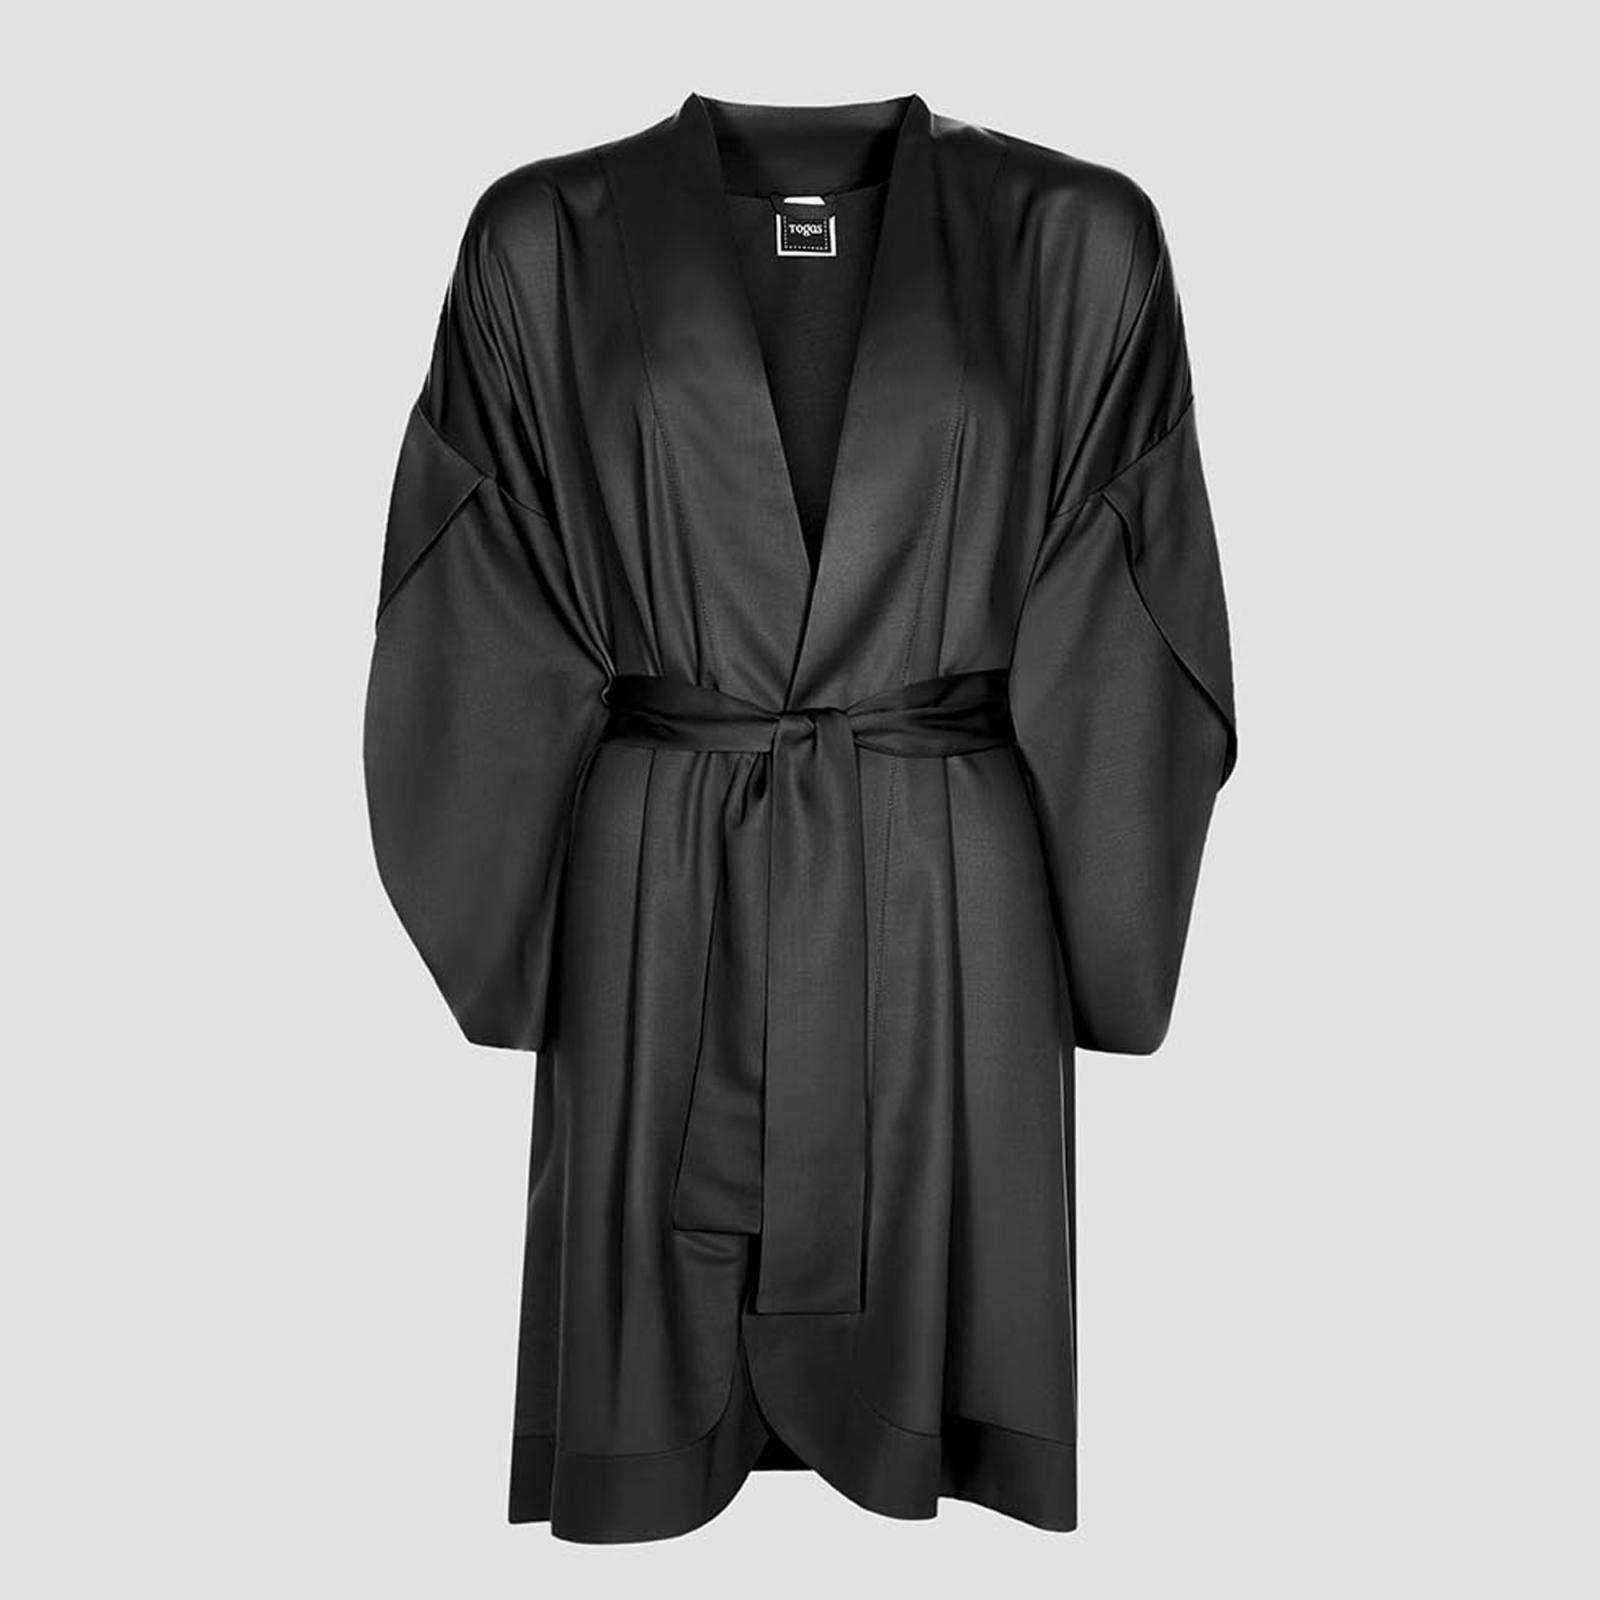 Халат-кимоно короткое Togas Наоми чёрное XL (50) халат кимоно короткое togas наоми чёрное l 48